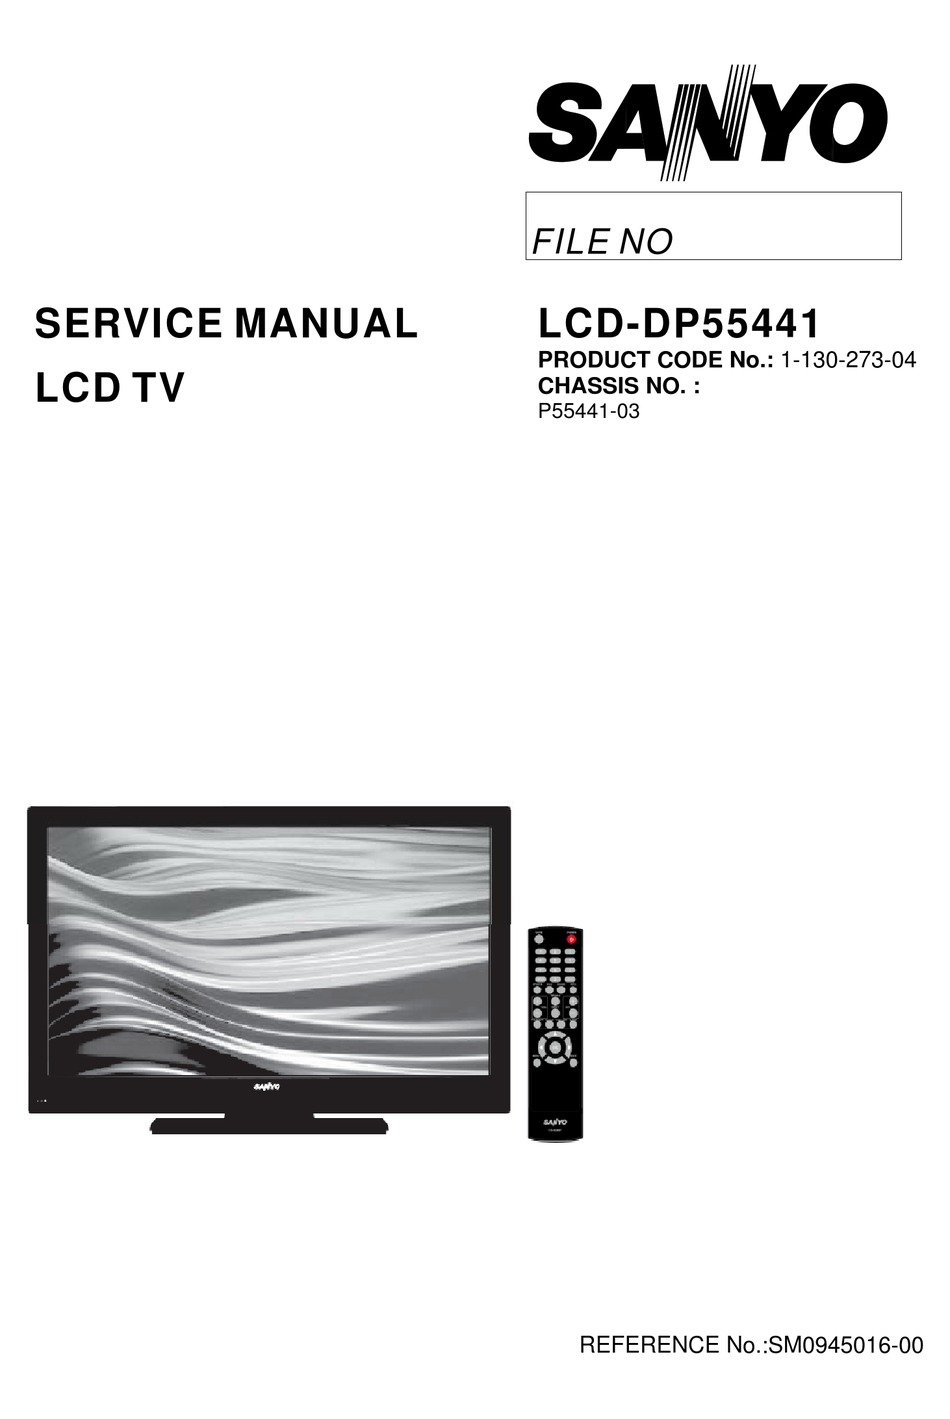 SANYO LCD-DP55441 SERVICE MANUAL Pdf Download | ManualsLib